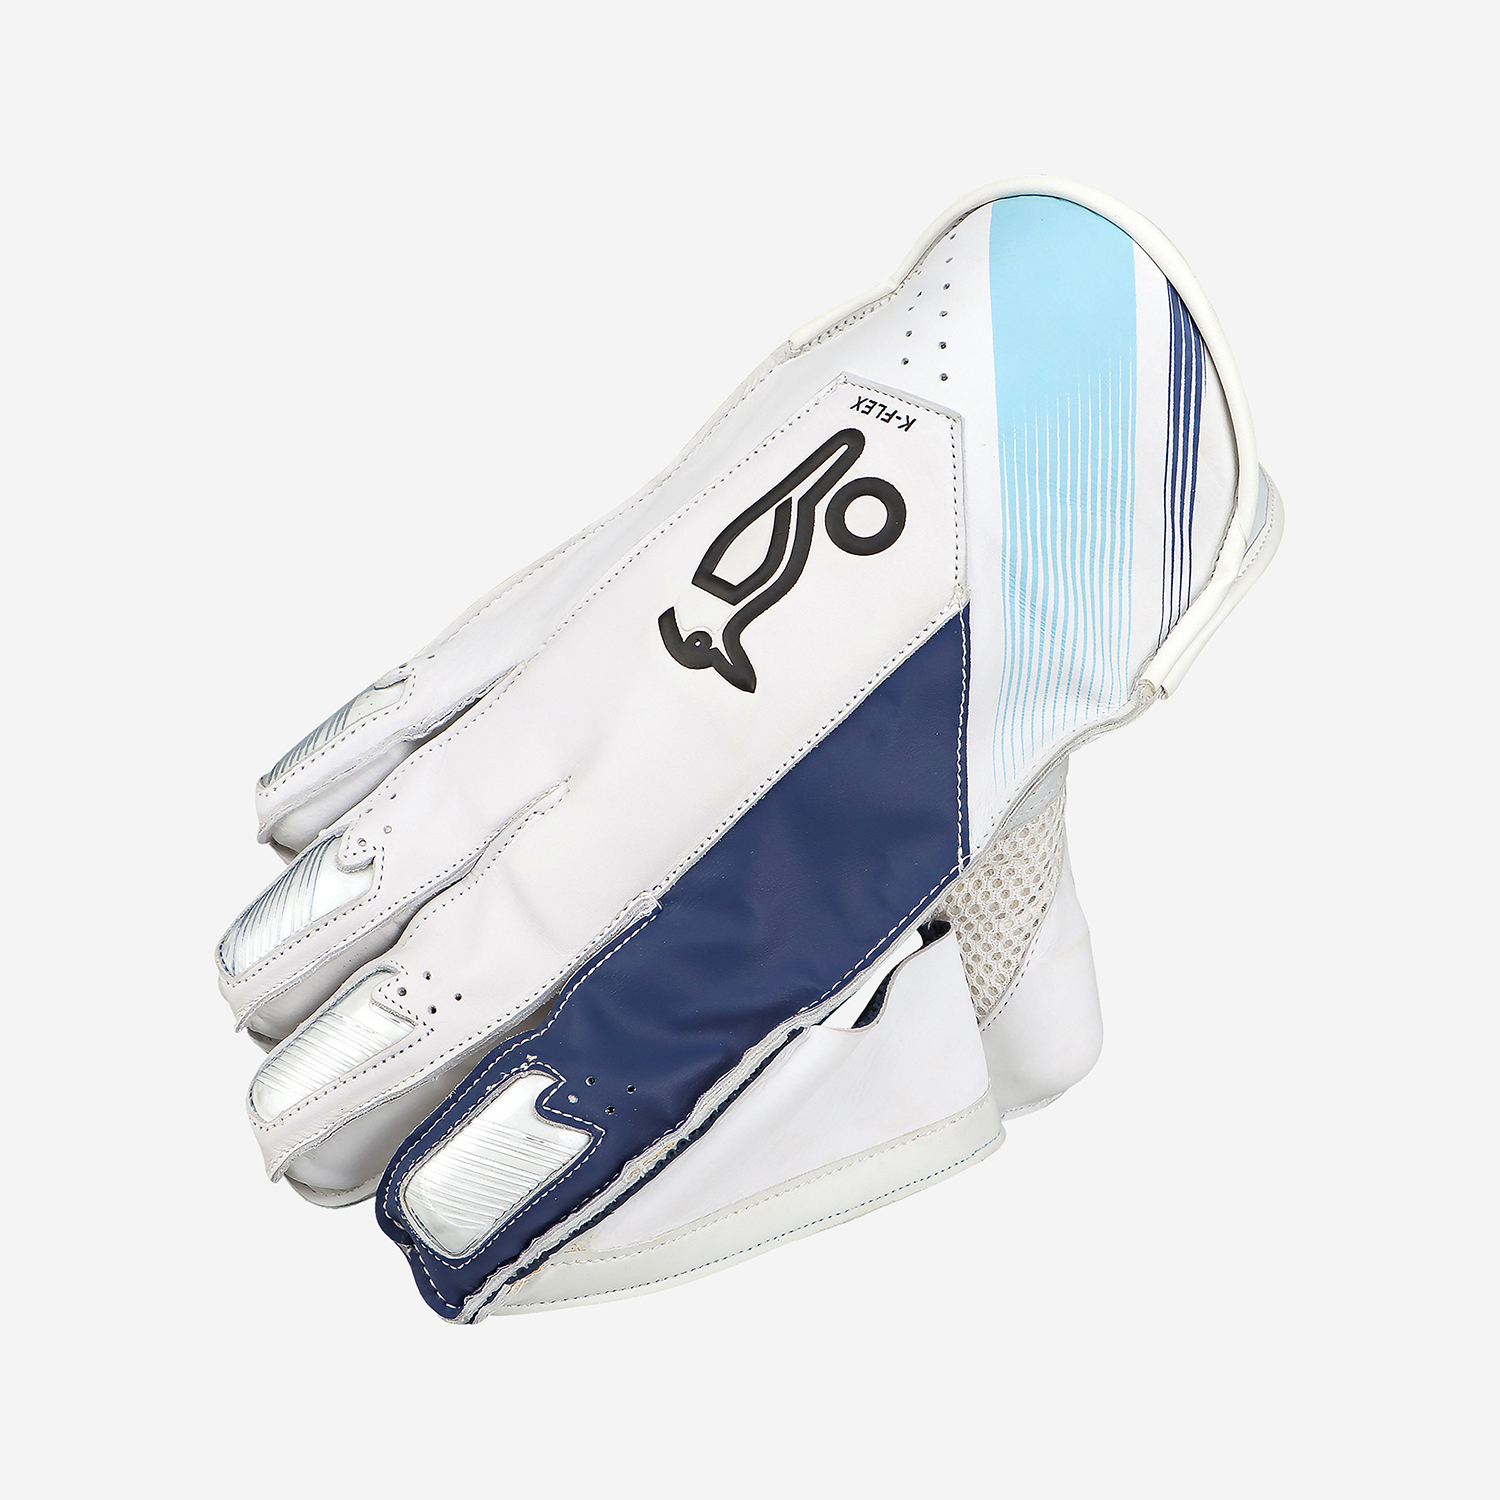 Pro 2.0 Wicket Keeping Gloves